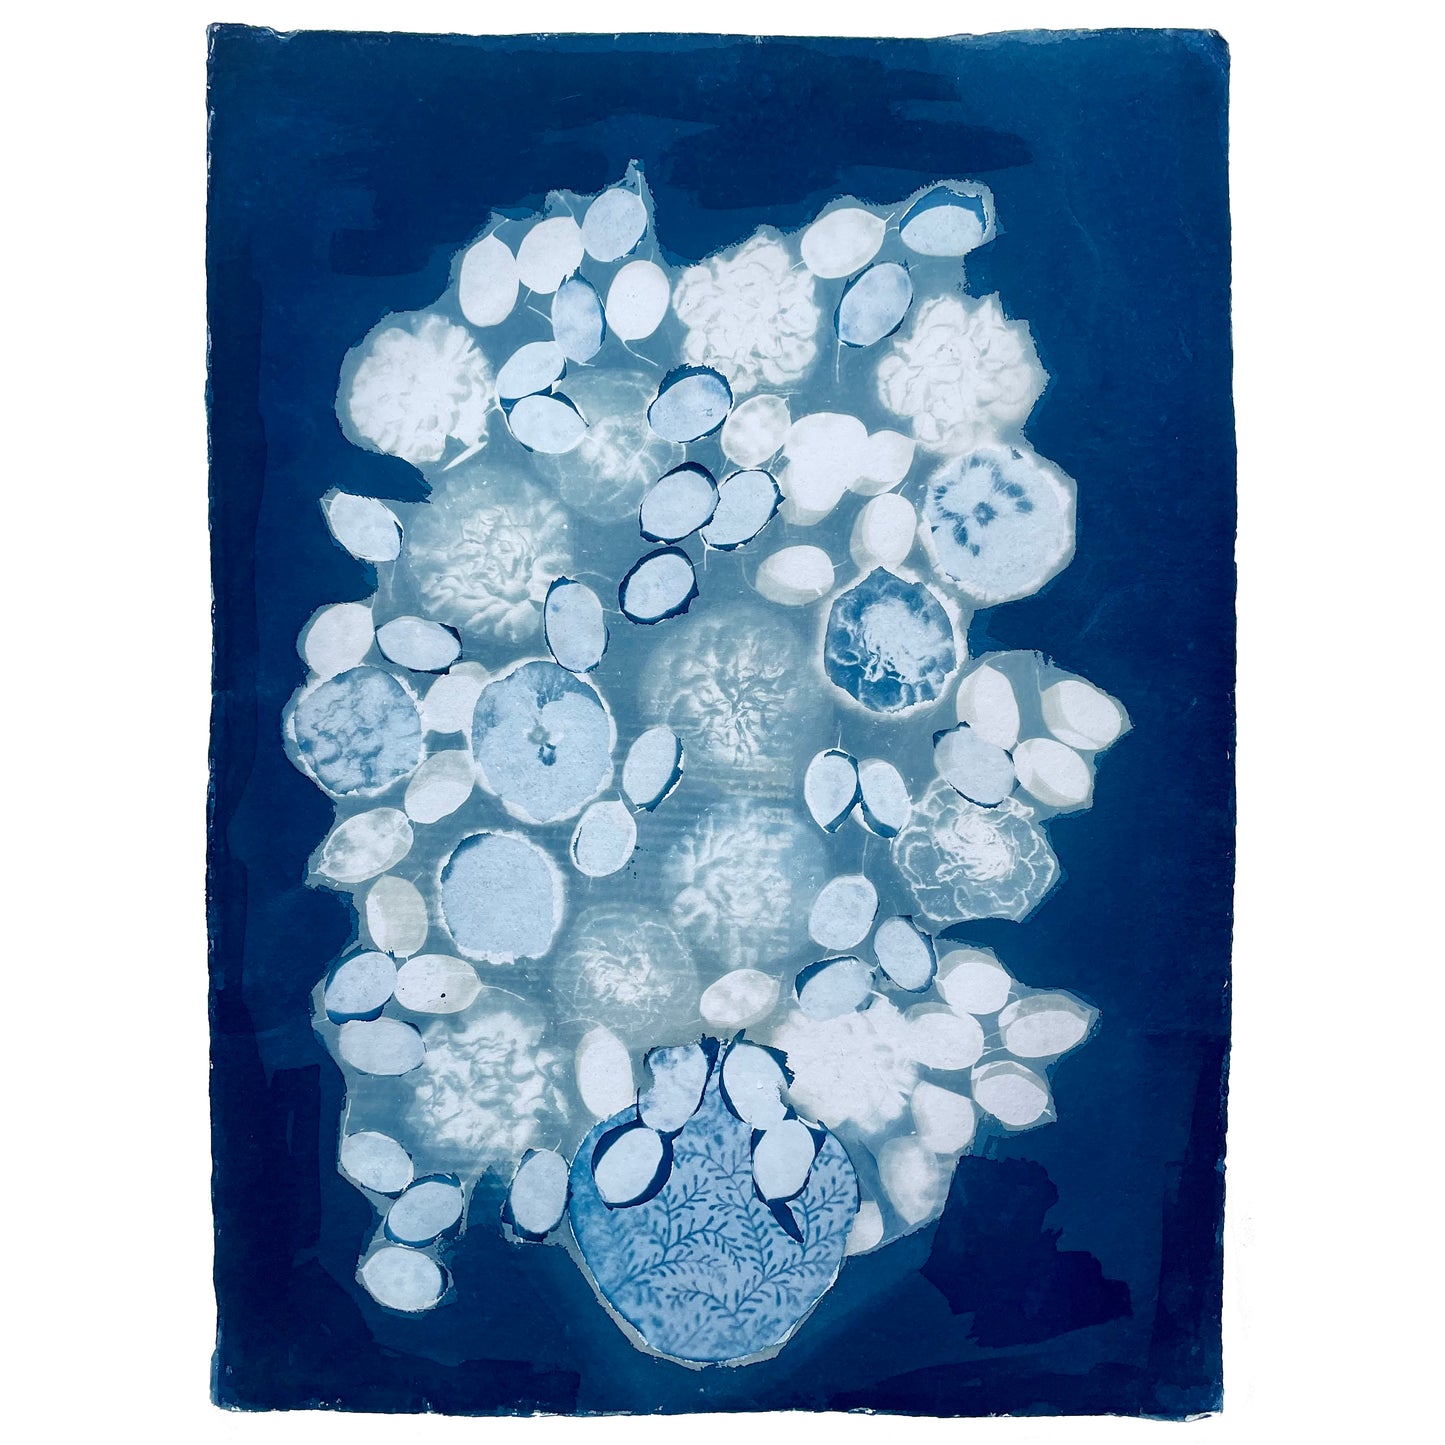 Blue series Vase 2, Giclee Print (A2 size) - THE BRISTOL ARTISAN